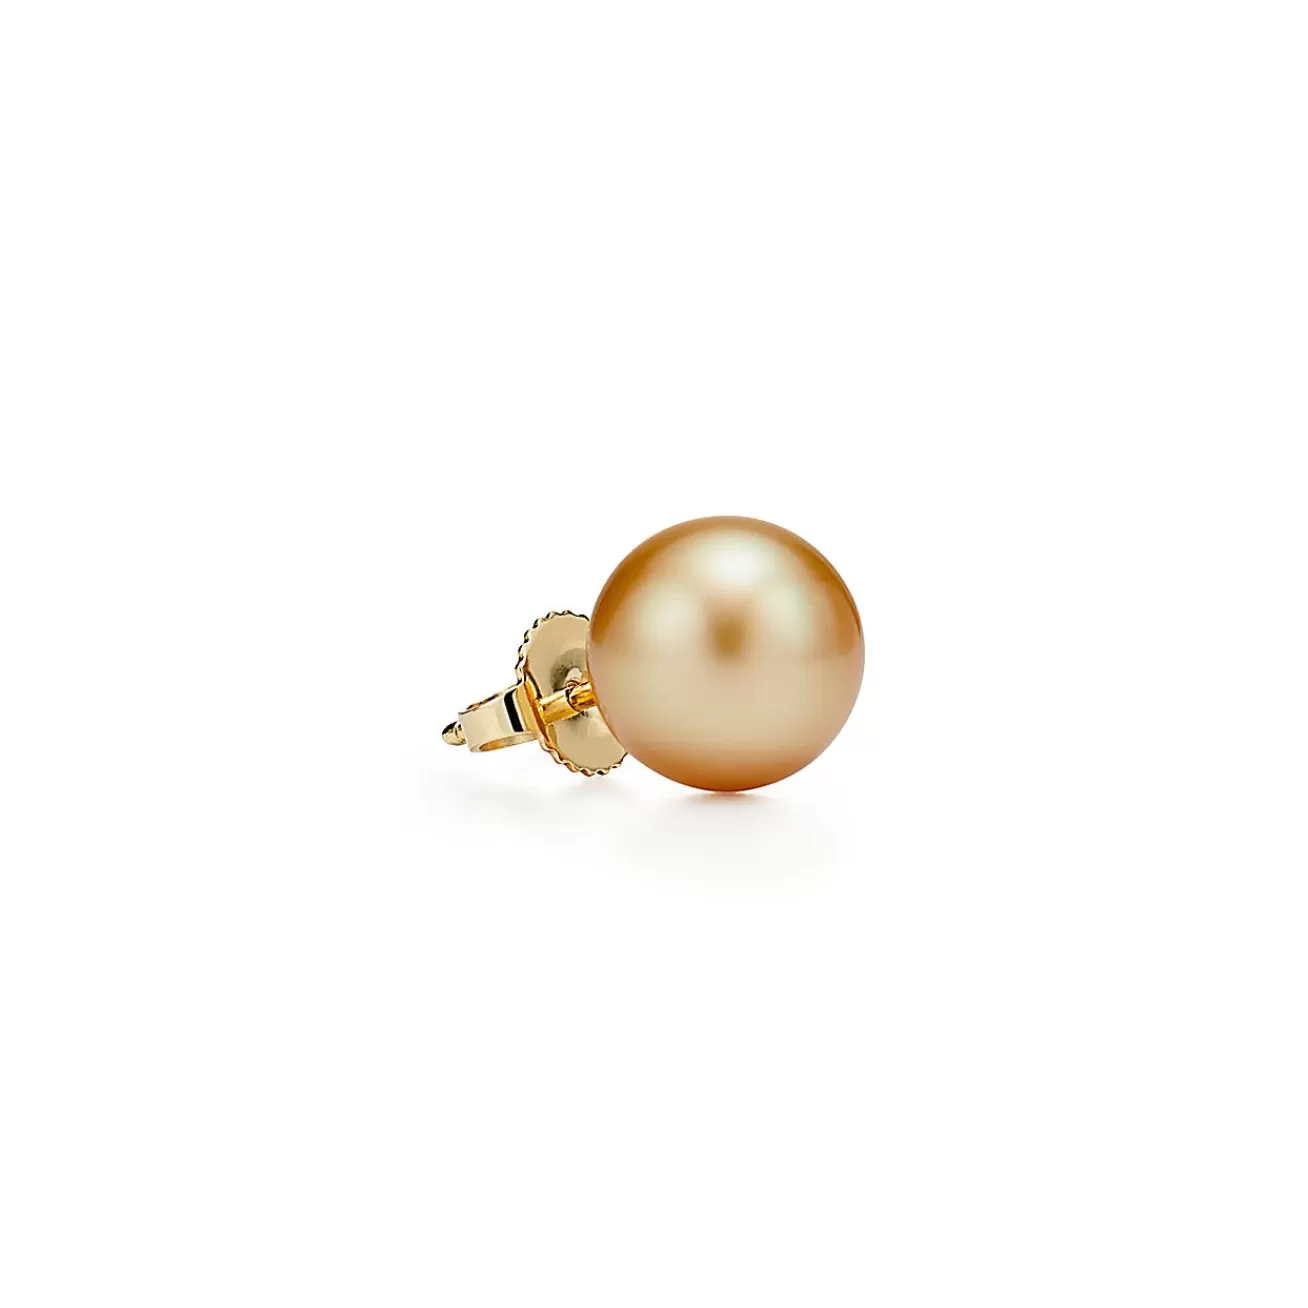 Tiffany & Co. Tiffany South Sea pearl earrings with 18k gold. | ^ Earrings | Gold Jewelry